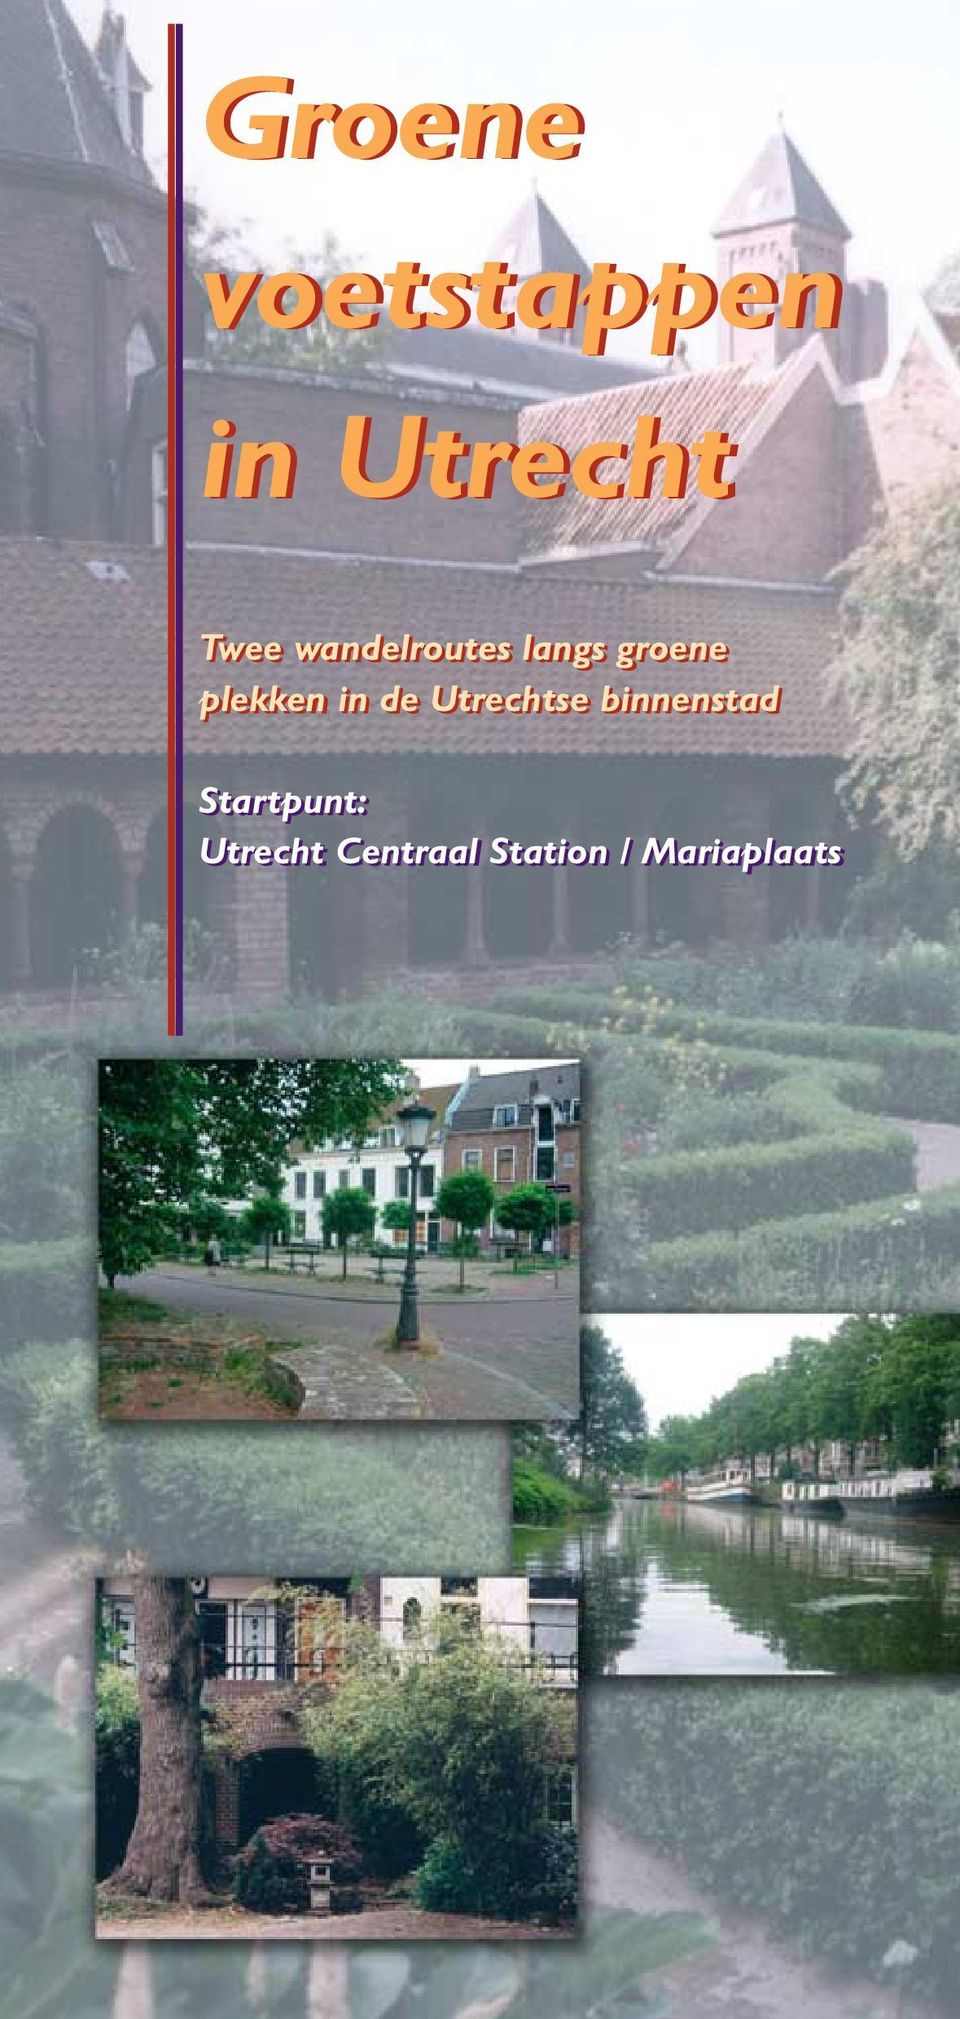 de Utrechtse binnenstad Startpunt: